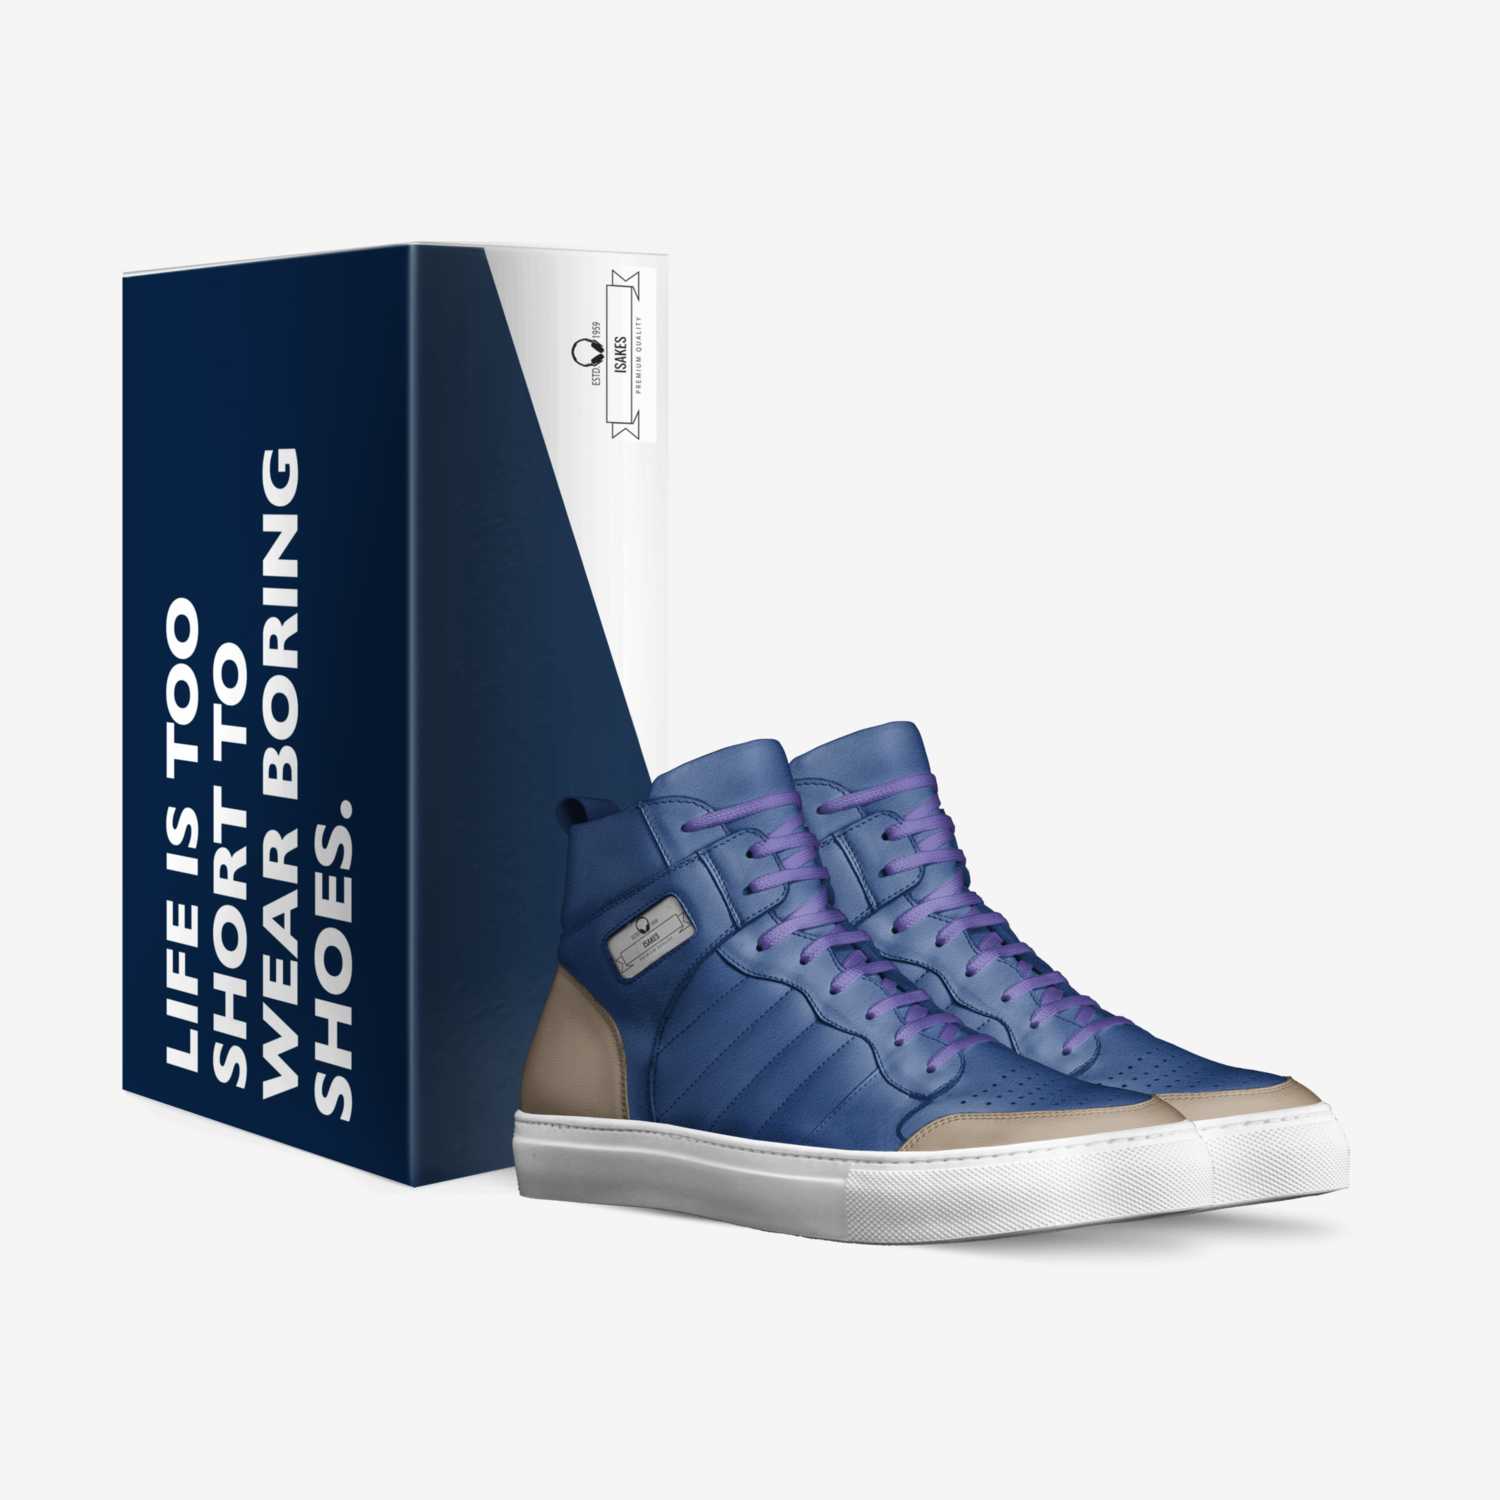 Isakes custom made in Italy shoes by Isaac Parada | Box view